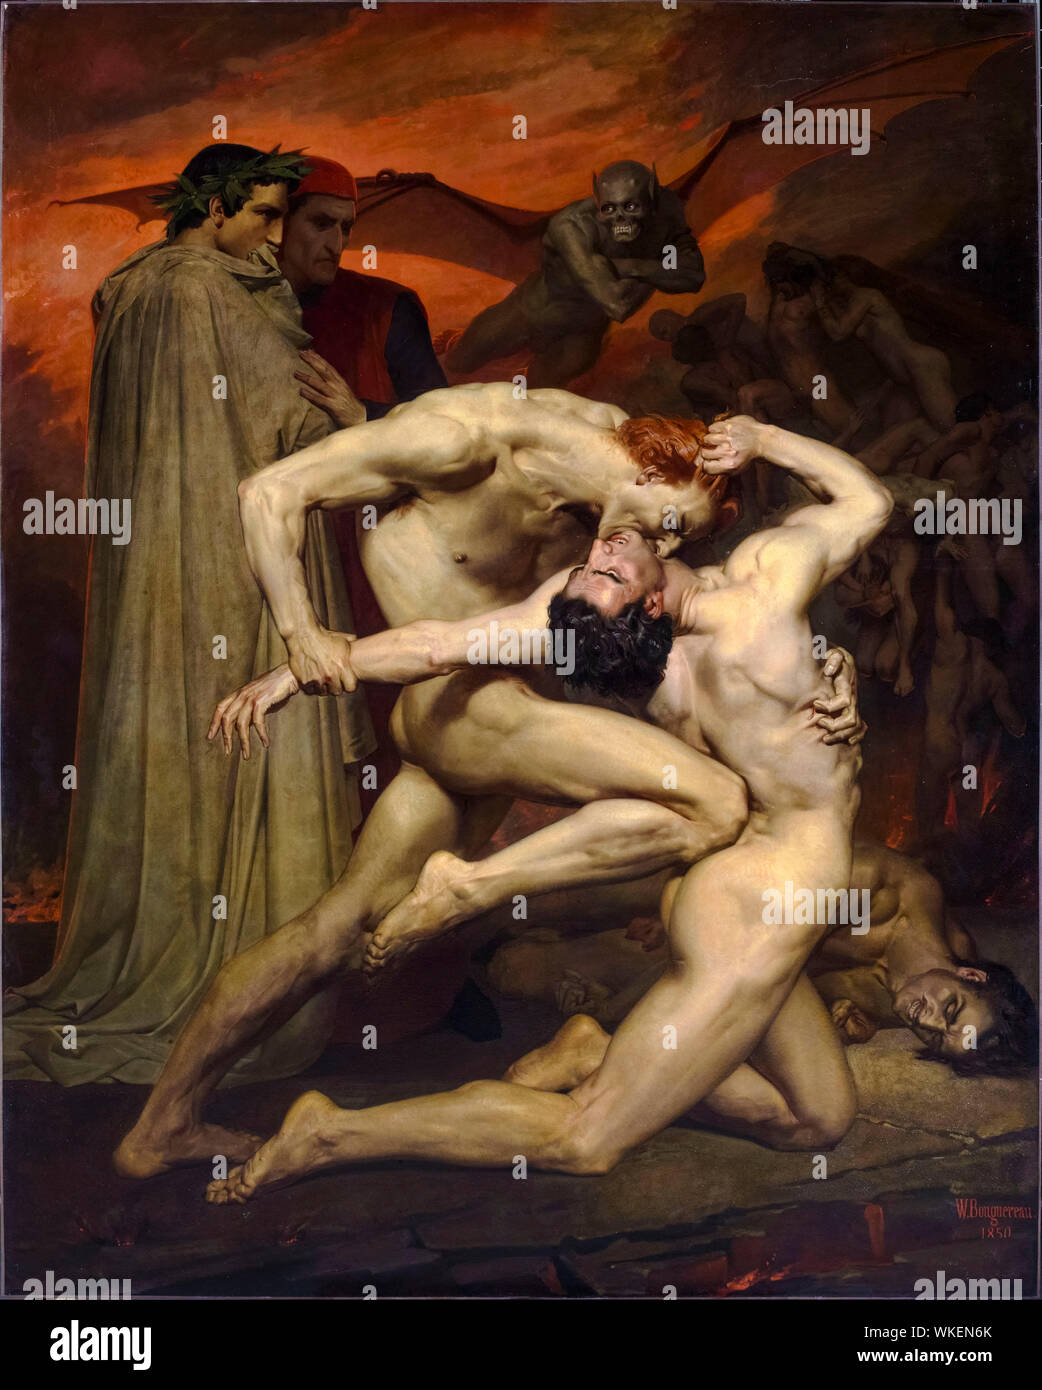 William-Adolphe Bouguereau, pittura, Dante e Virgil in Inferno, 1850 Foto Stock